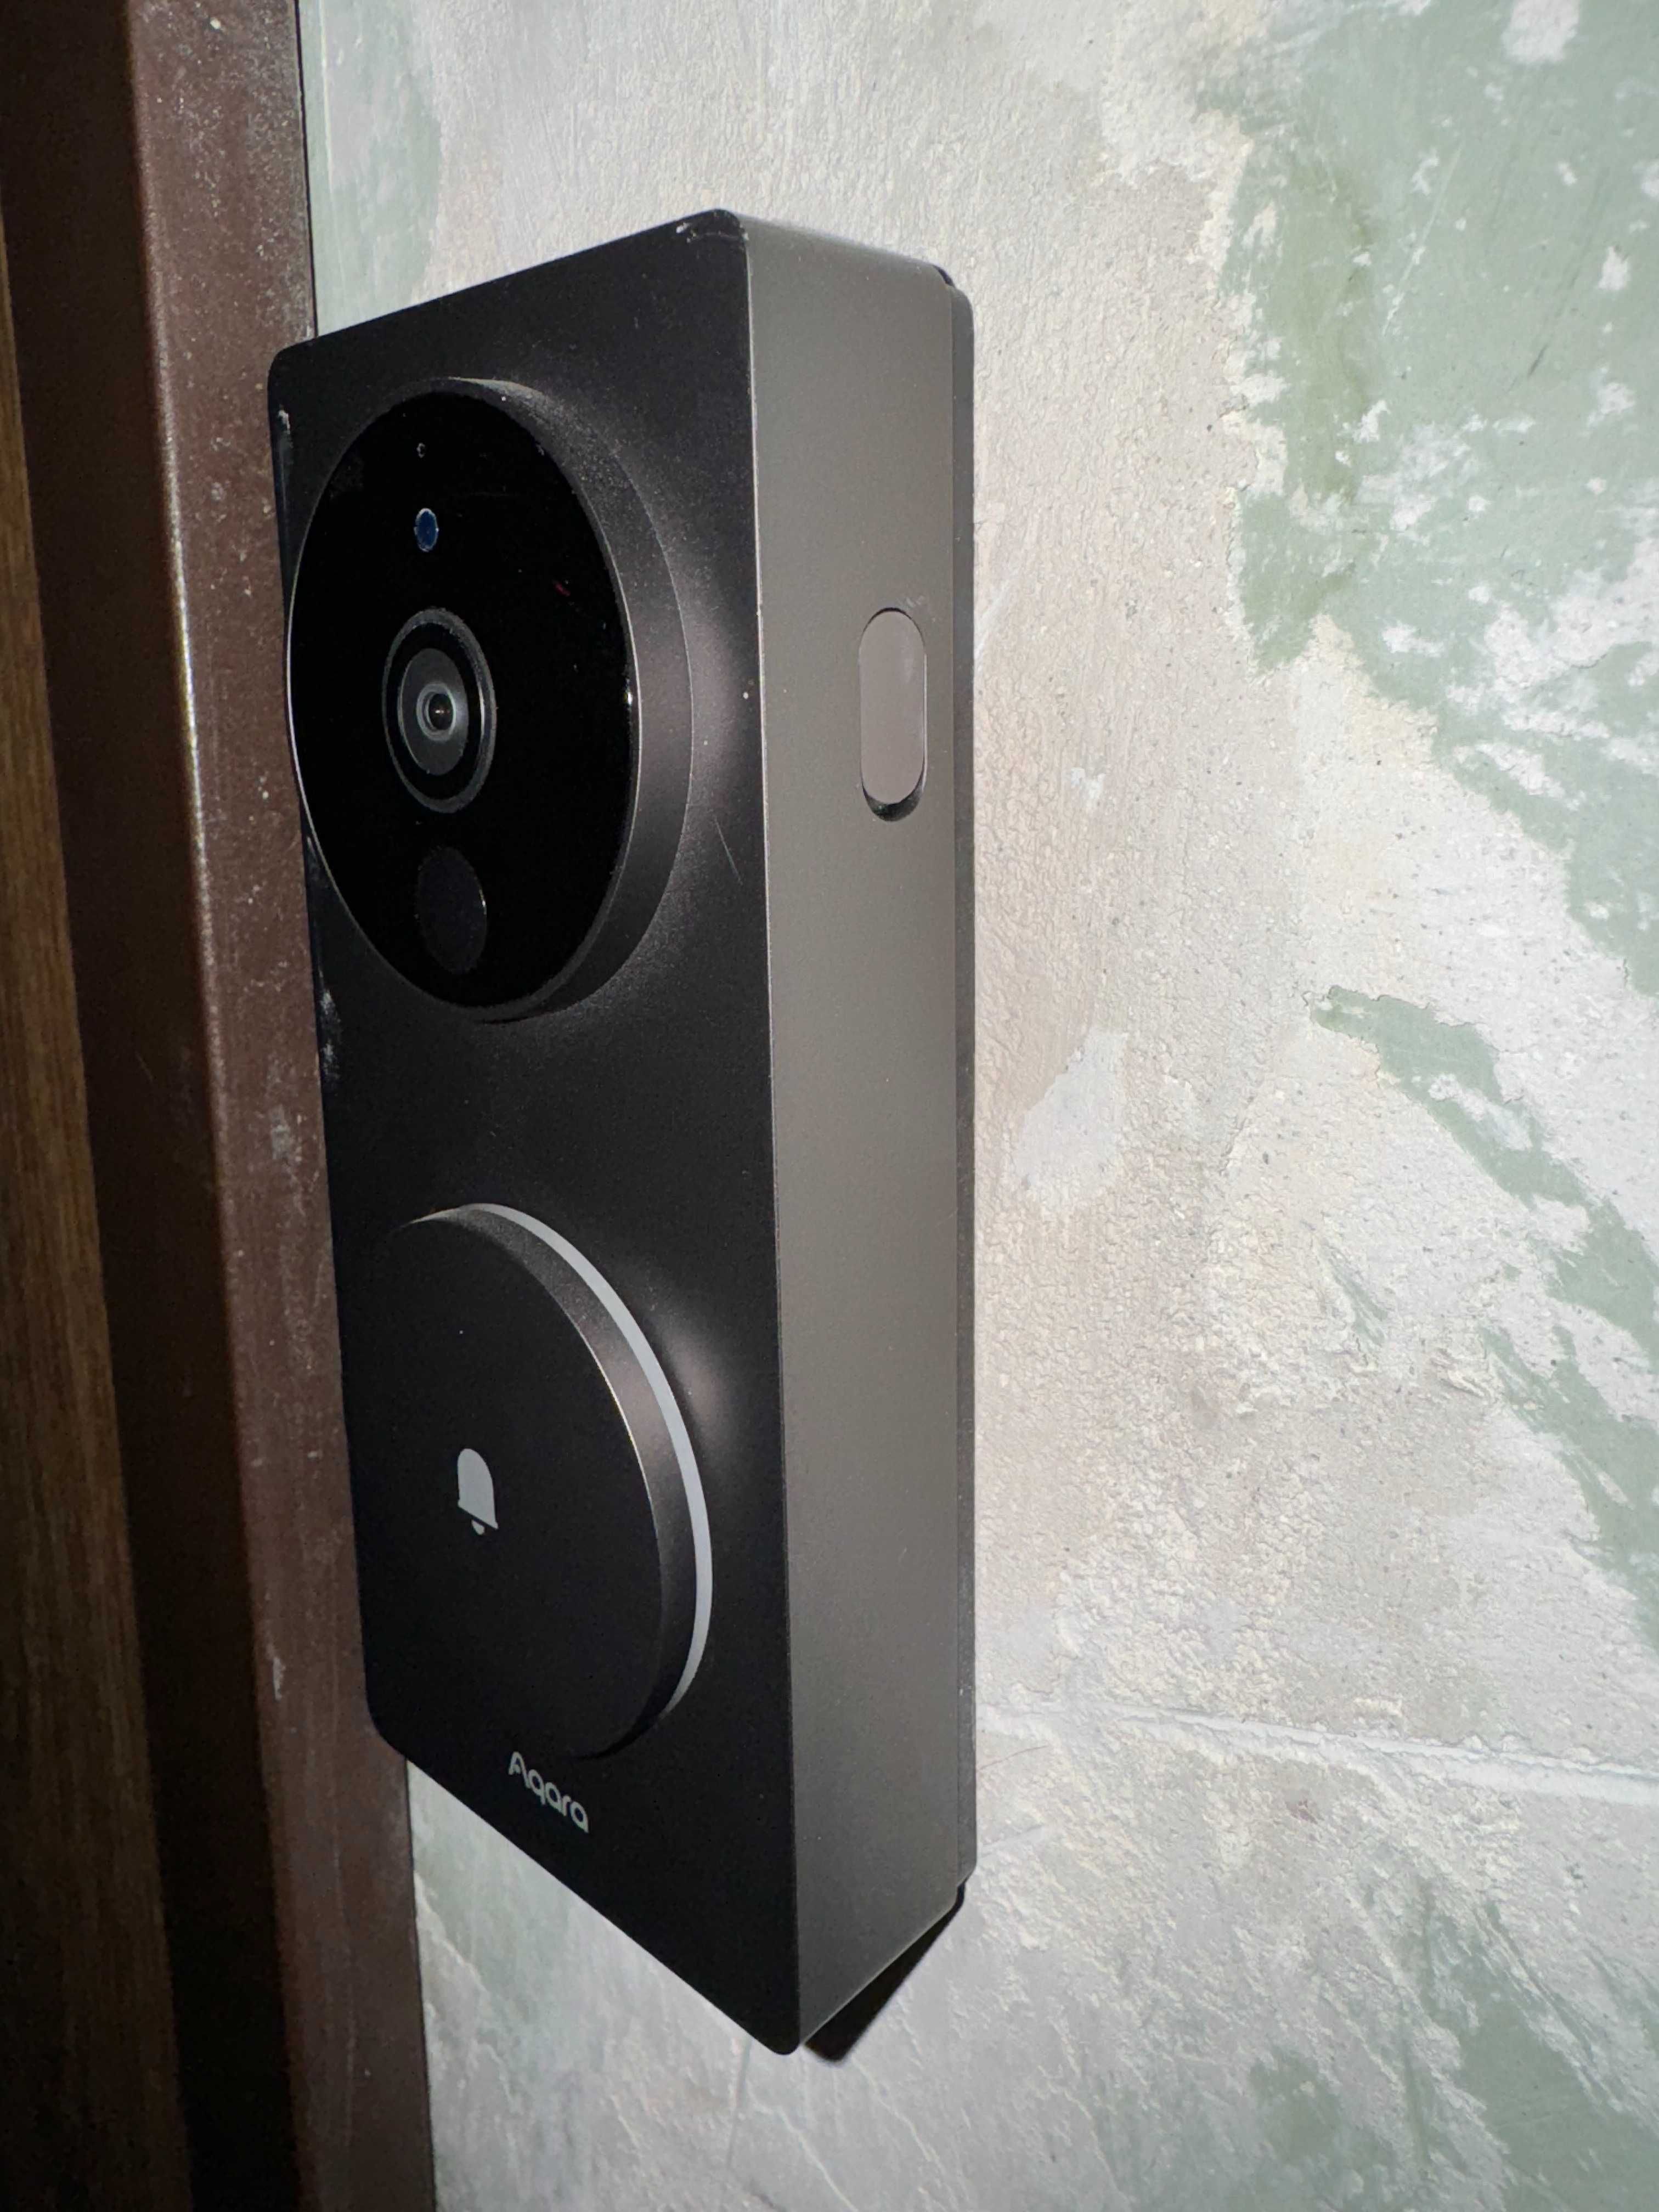 Відеодзвінок Xiaomi Aqara G4 Smart Video Doorbell (ZNKSML01LM) Grey